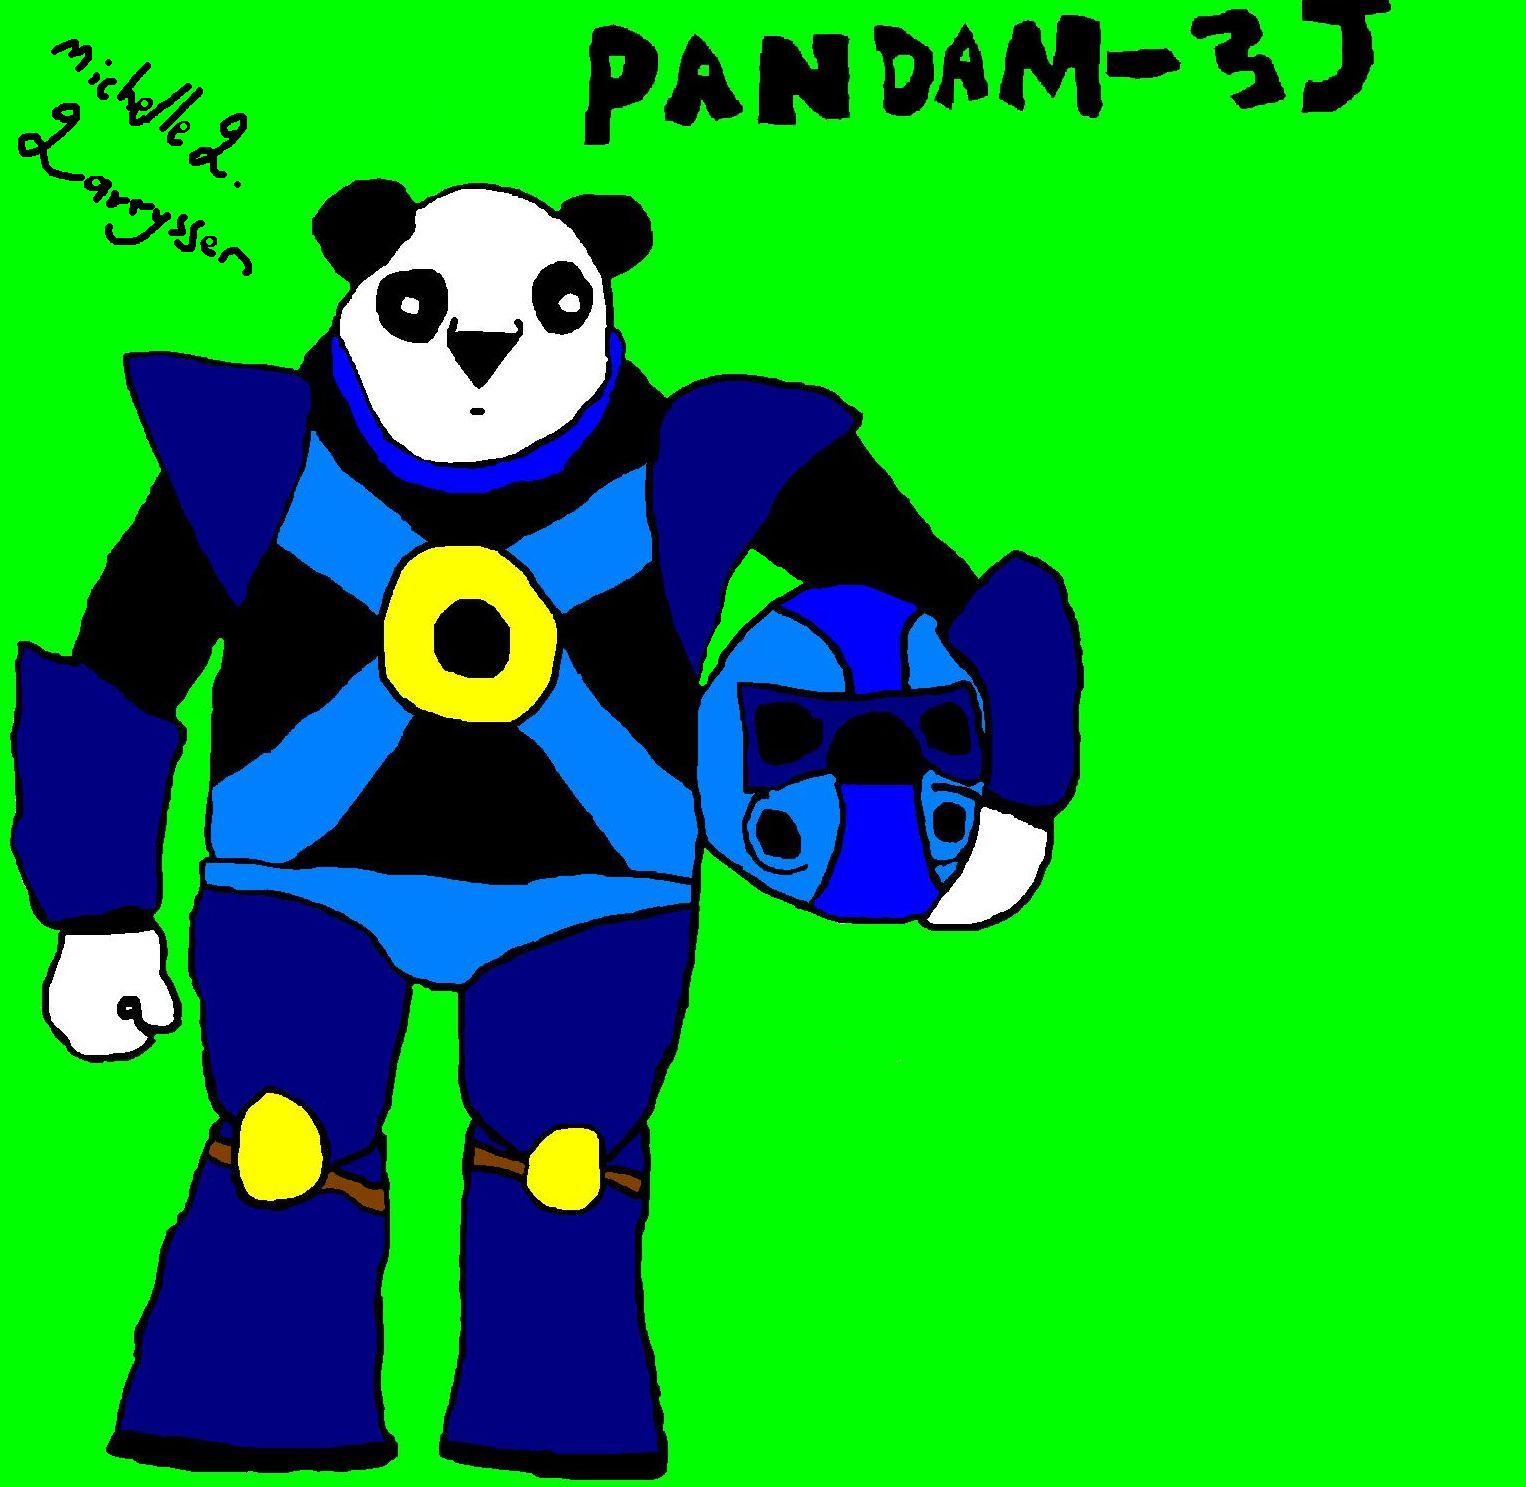 Pandam-3J by night_elf_girl